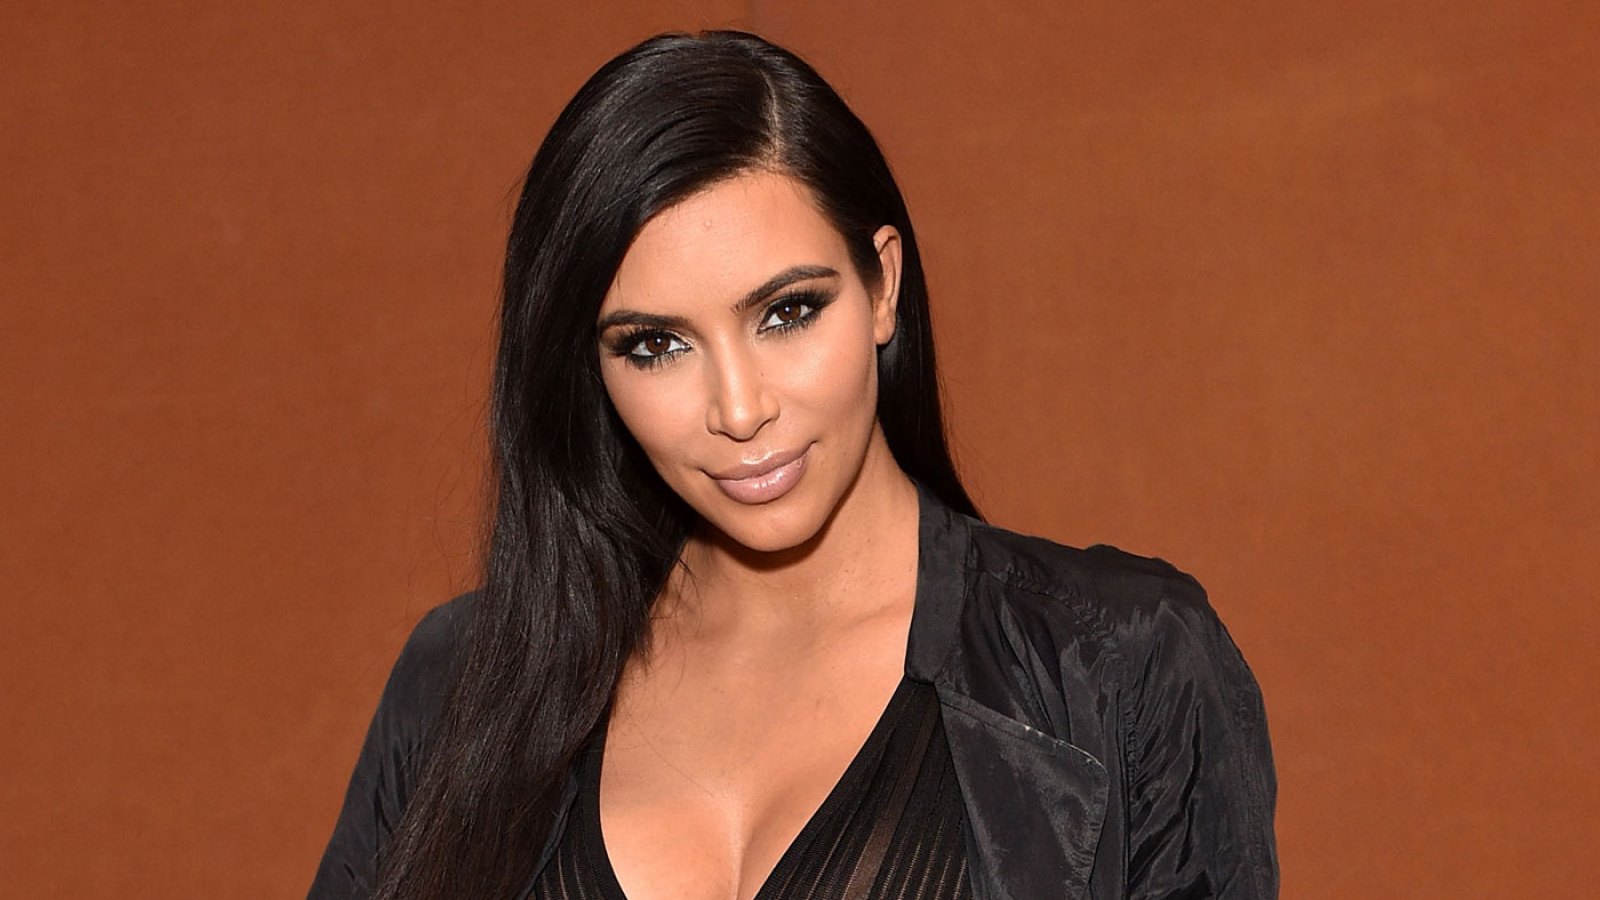 Kim Kardashian has joined Snapchat